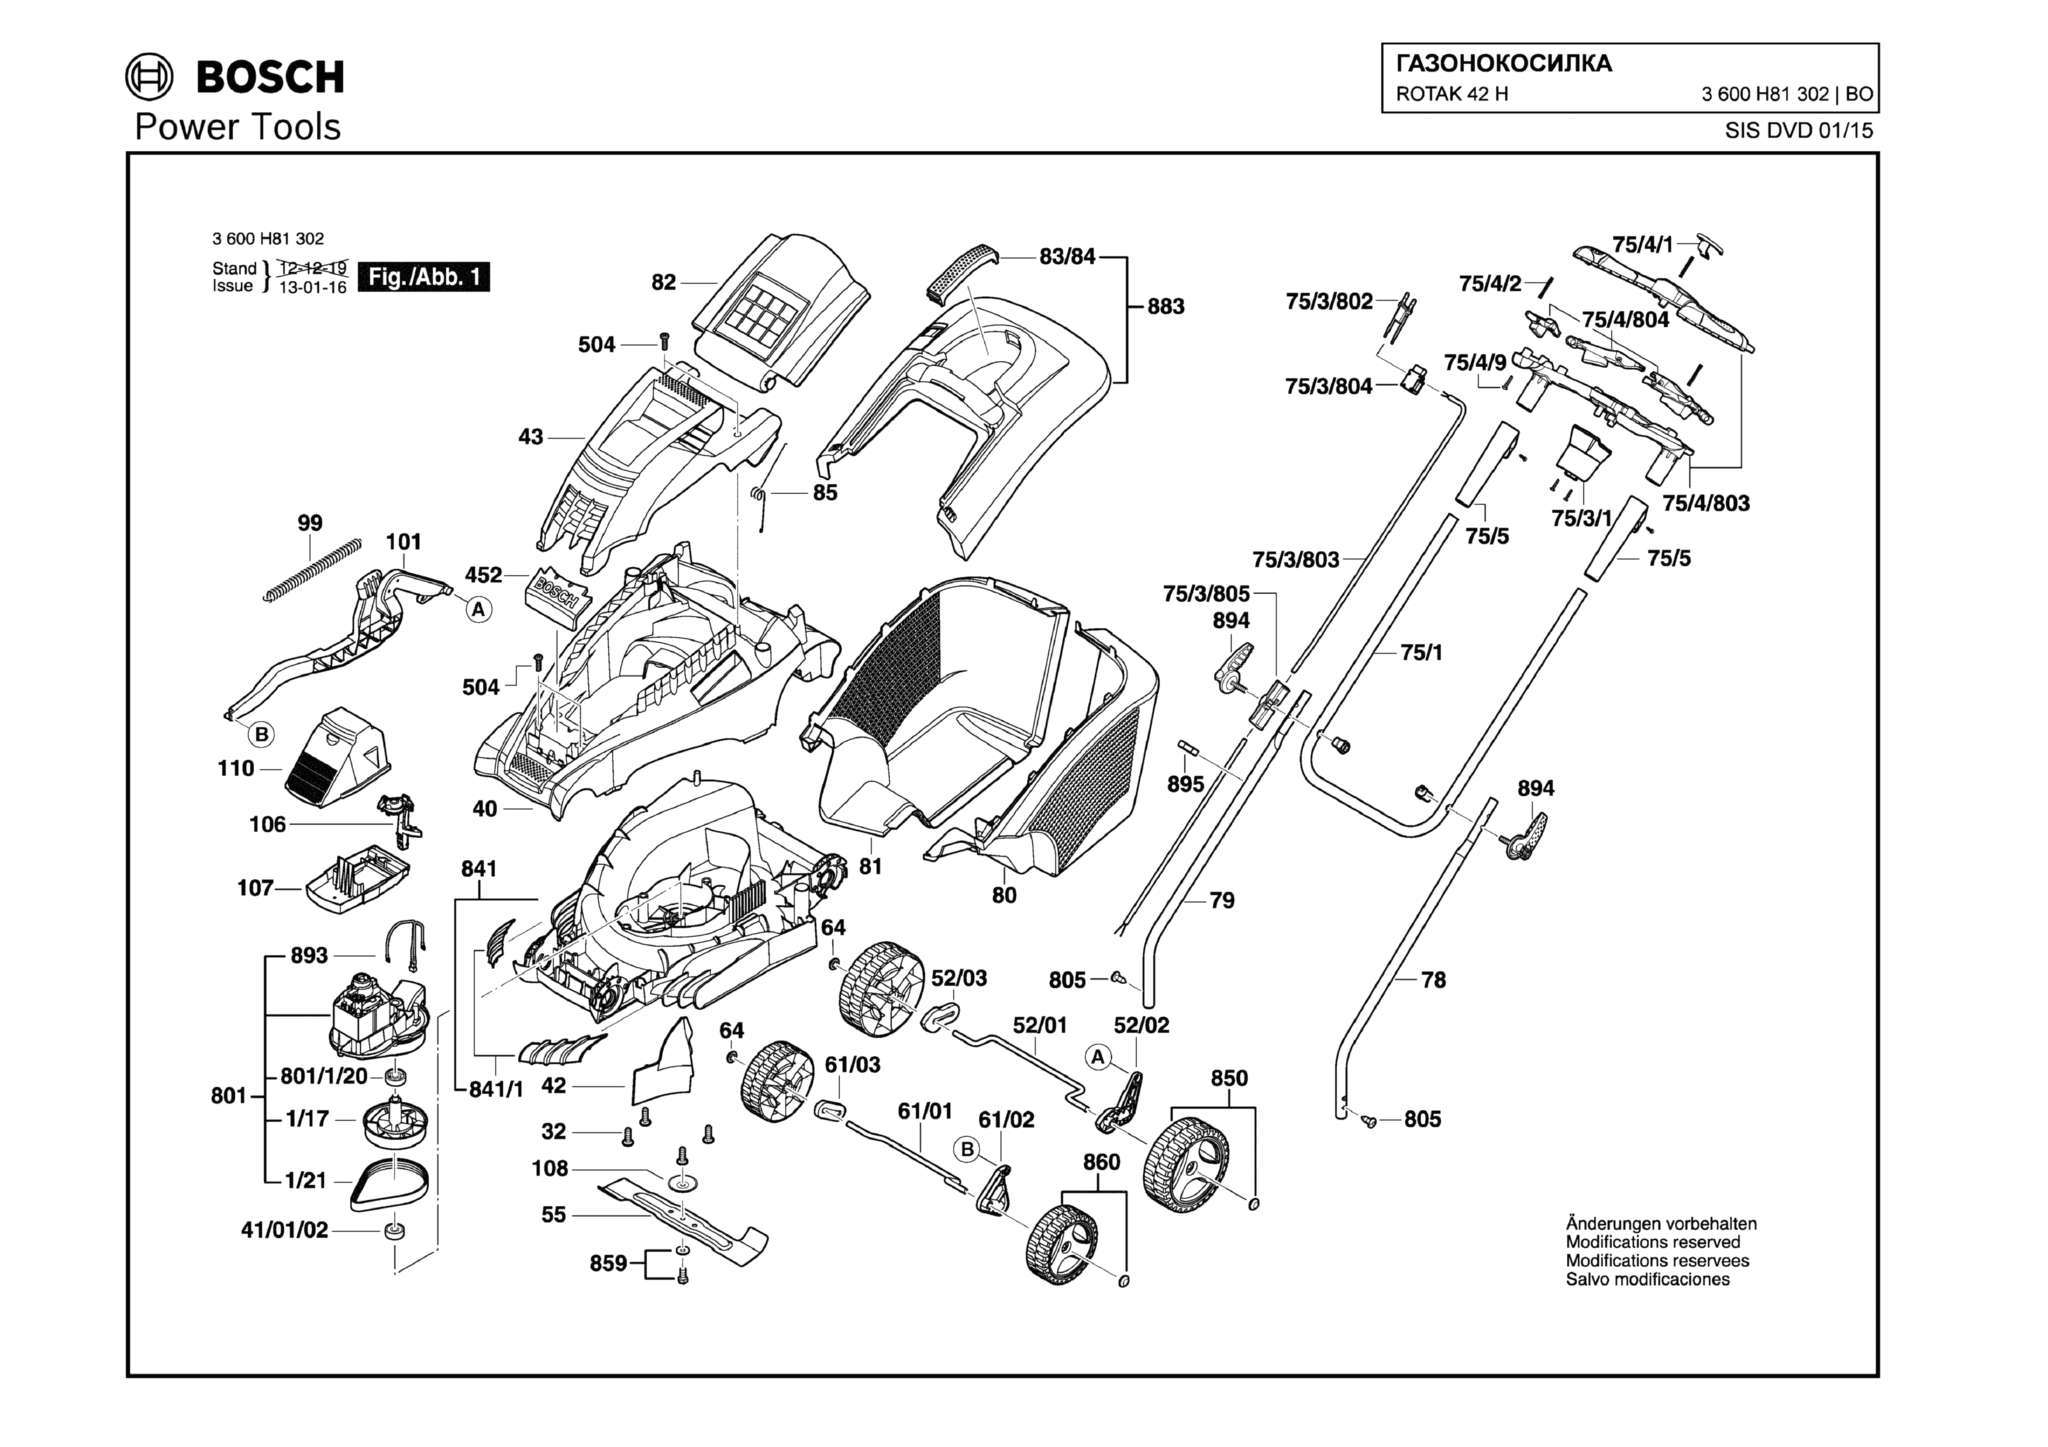 Запчасти, схема и деталировка Bosch ROTAK 42 H (ТИП 3600H81302)